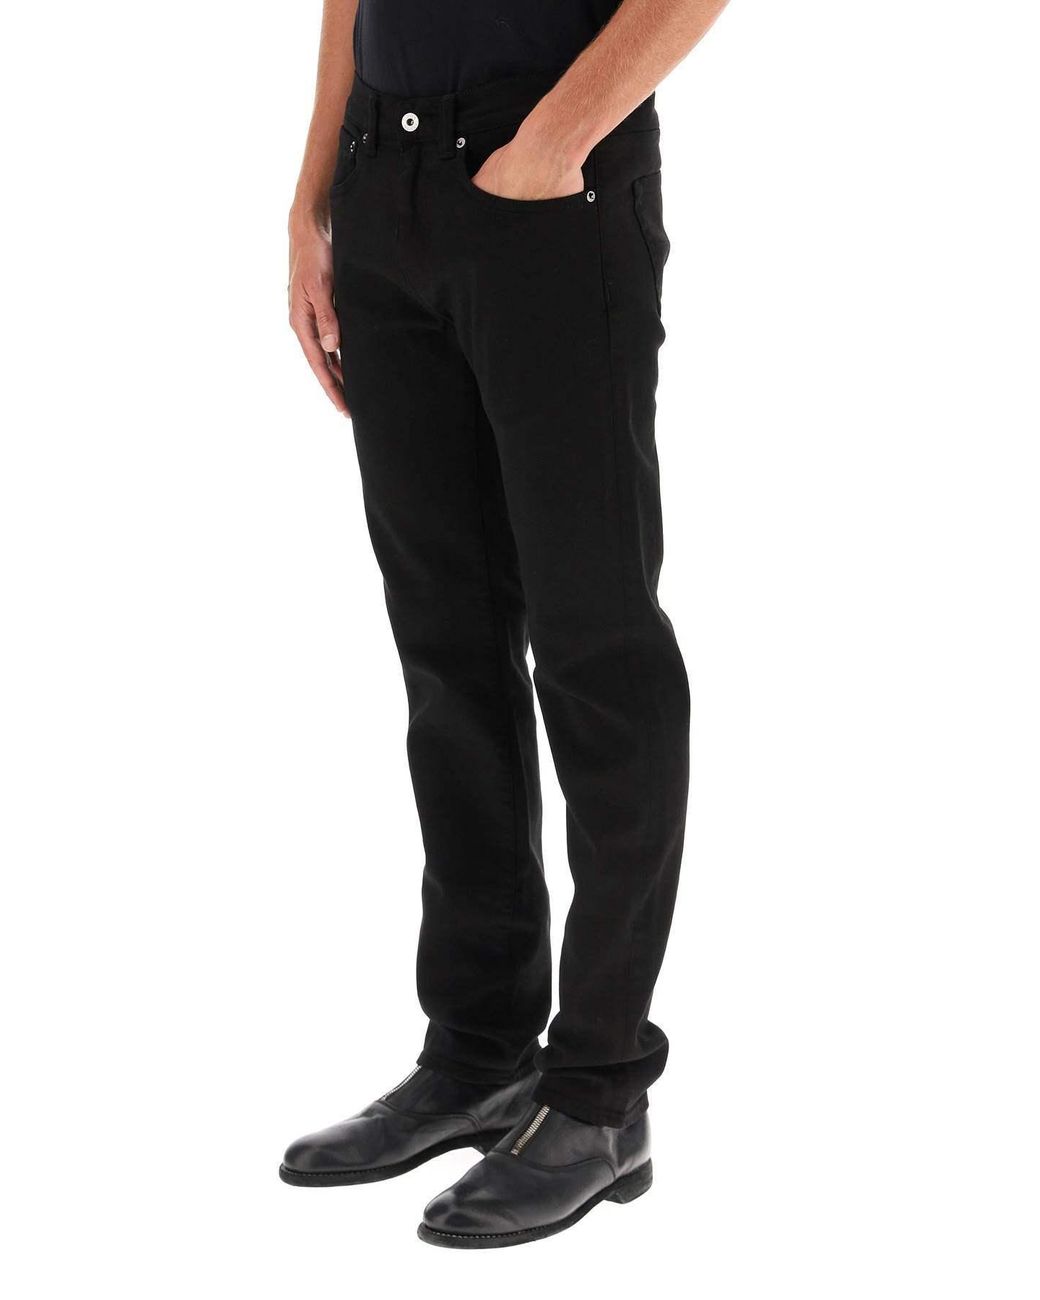 Edwin Denim Ed-80 Slim Tapered Jeans in Black for Men - Lyst